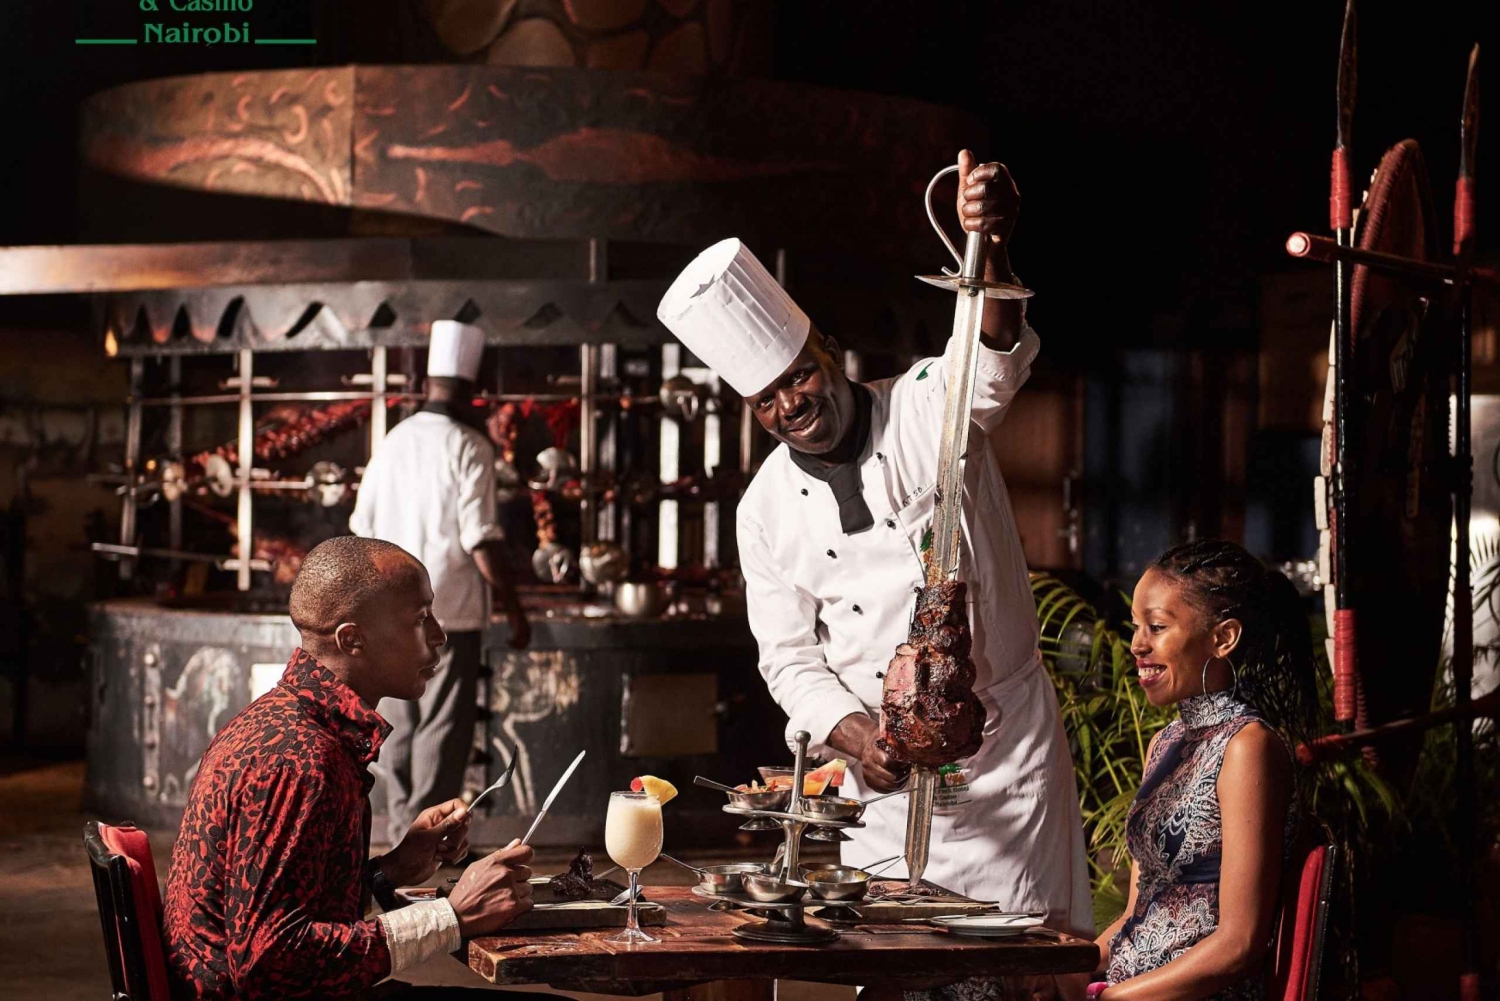 Safari Park Hotel Show & Dinner Experience In Nairobi Tour